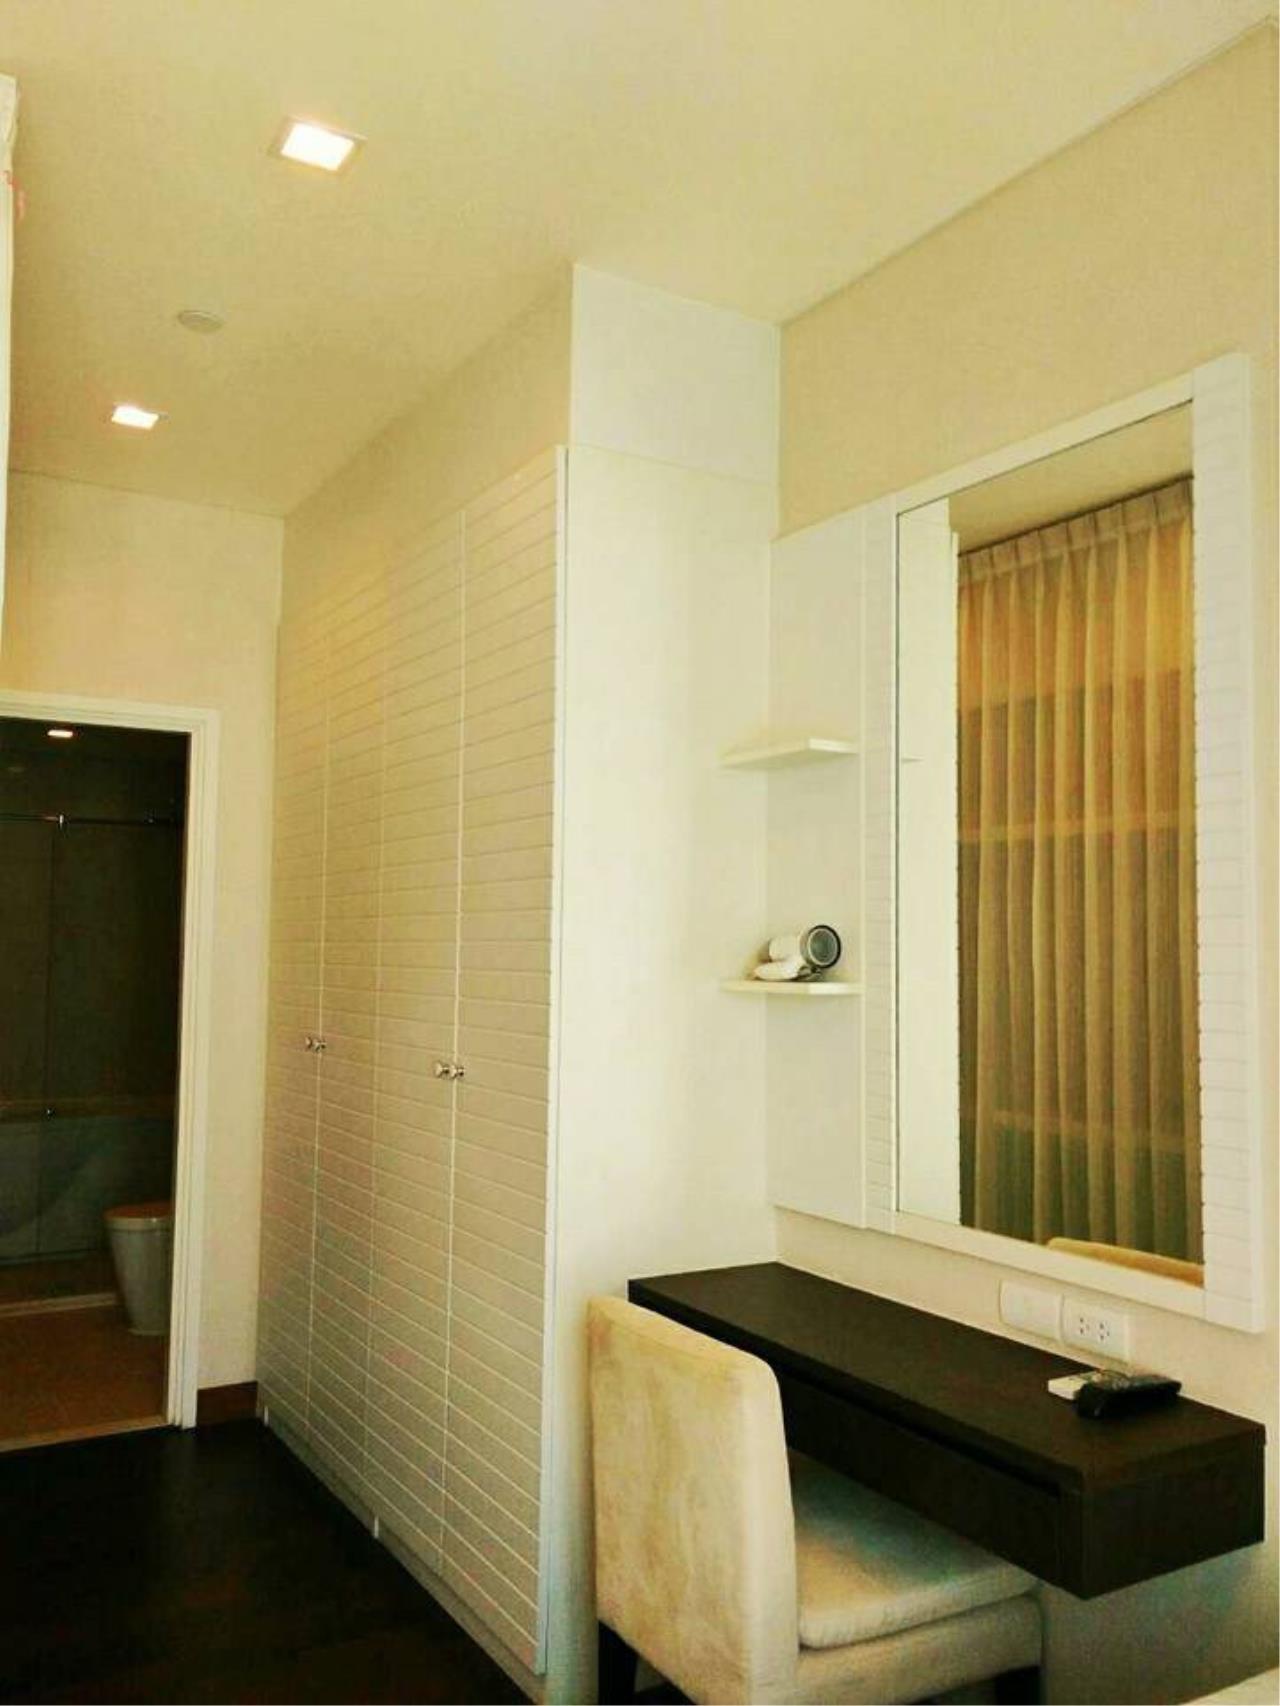 Agent - Phapayawarin Agency's For Rent :  Ivy Thonglor, BTS Thonglor, 1 bedroom 1 bathroom, 43 sq.m 4